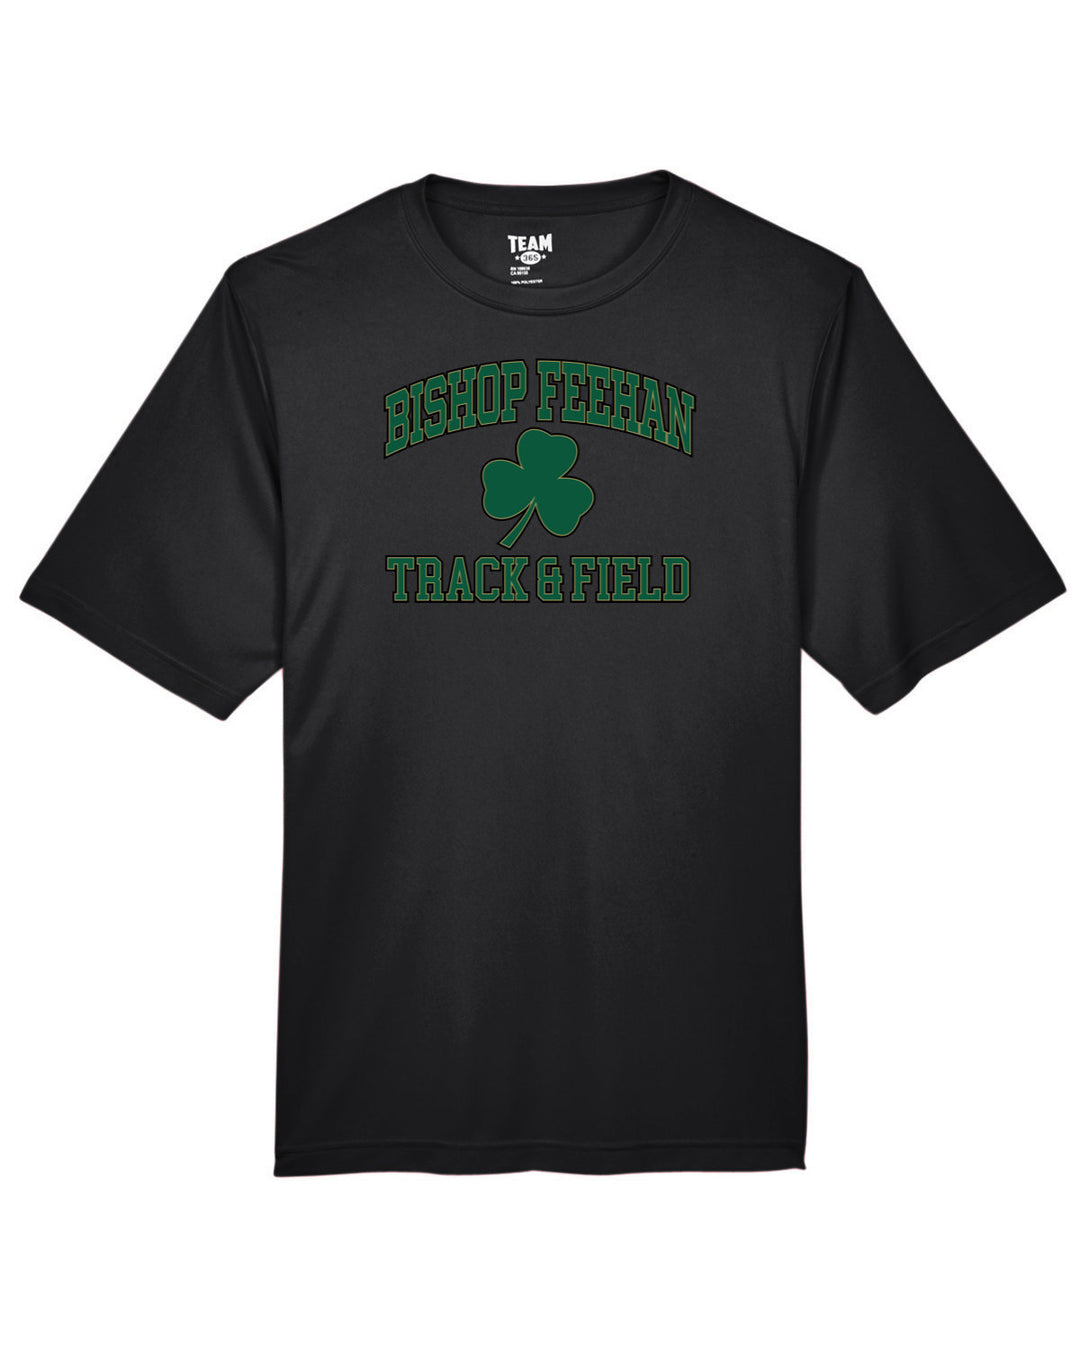 Bishop Feehan Track & Field - Team 365 Men's Zone Performance T-Shirt (TT11)